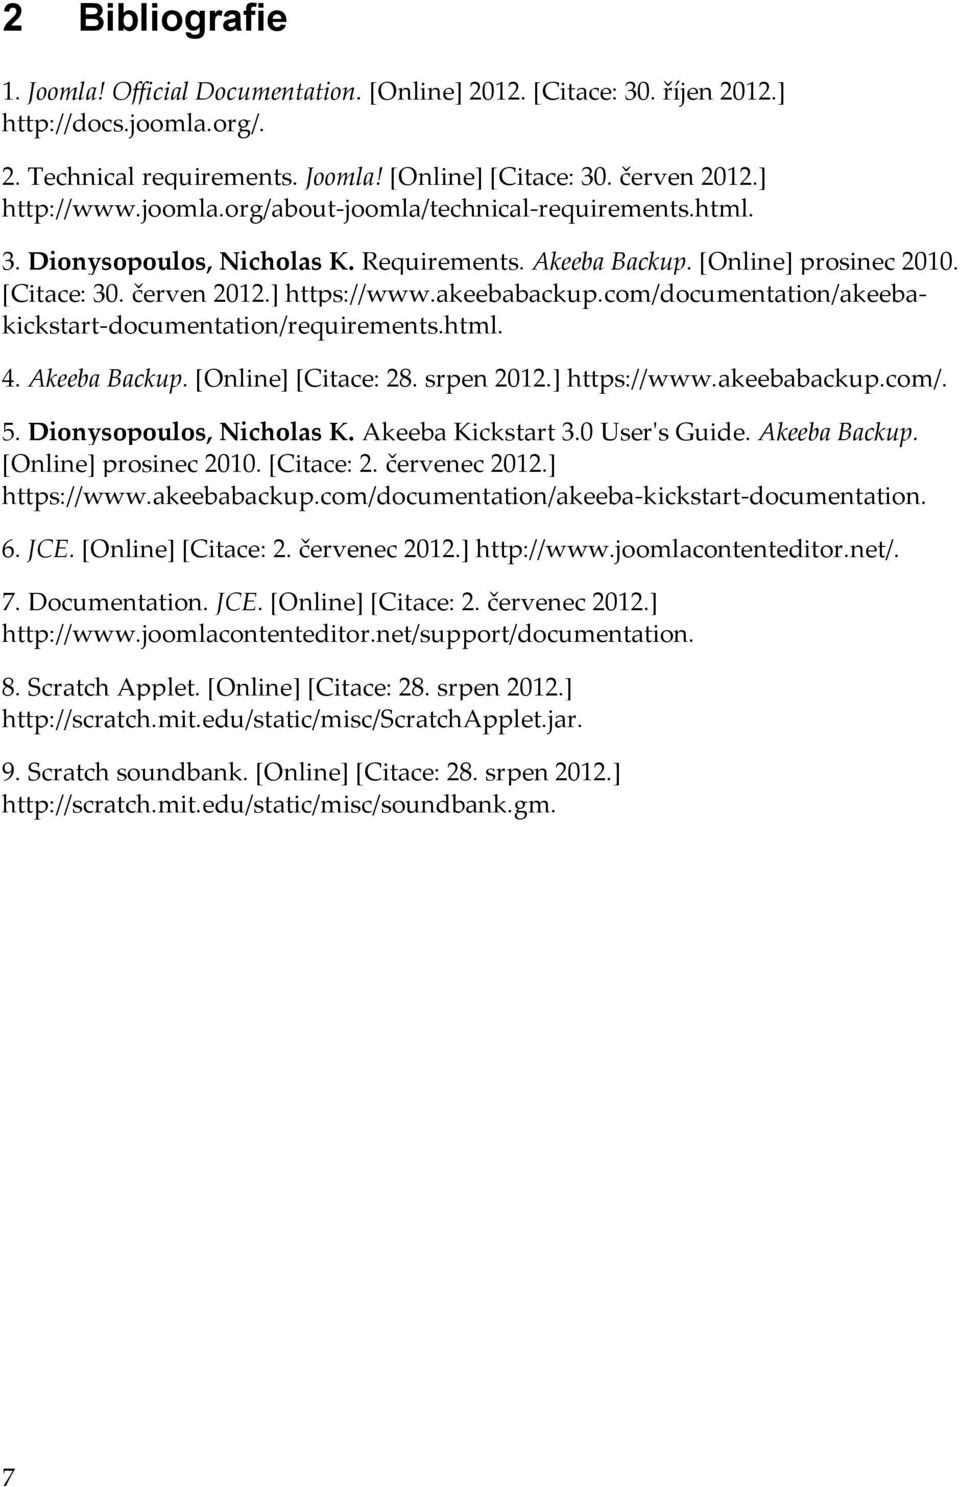 com/documentation/akeebakickstart-documentation/requirements.html. 4. Akeeba Backup. [Online] [Citace: 28. srpen 2012.] https://www.akeebabackup.com/. 5. Dionysopoulos, Nicholas K. Akeeba Kickstart 3.